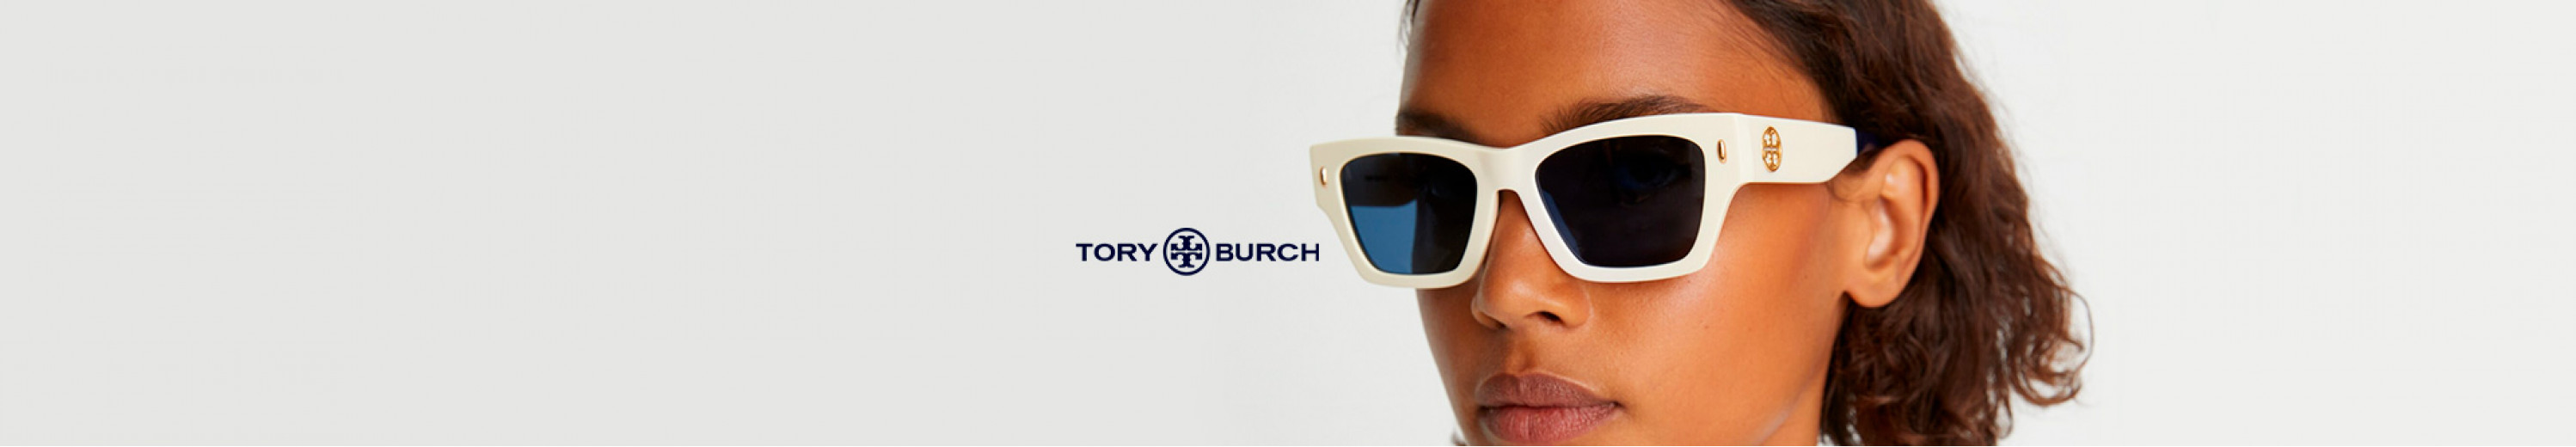 Tory Burch Miller Eyewear Collection